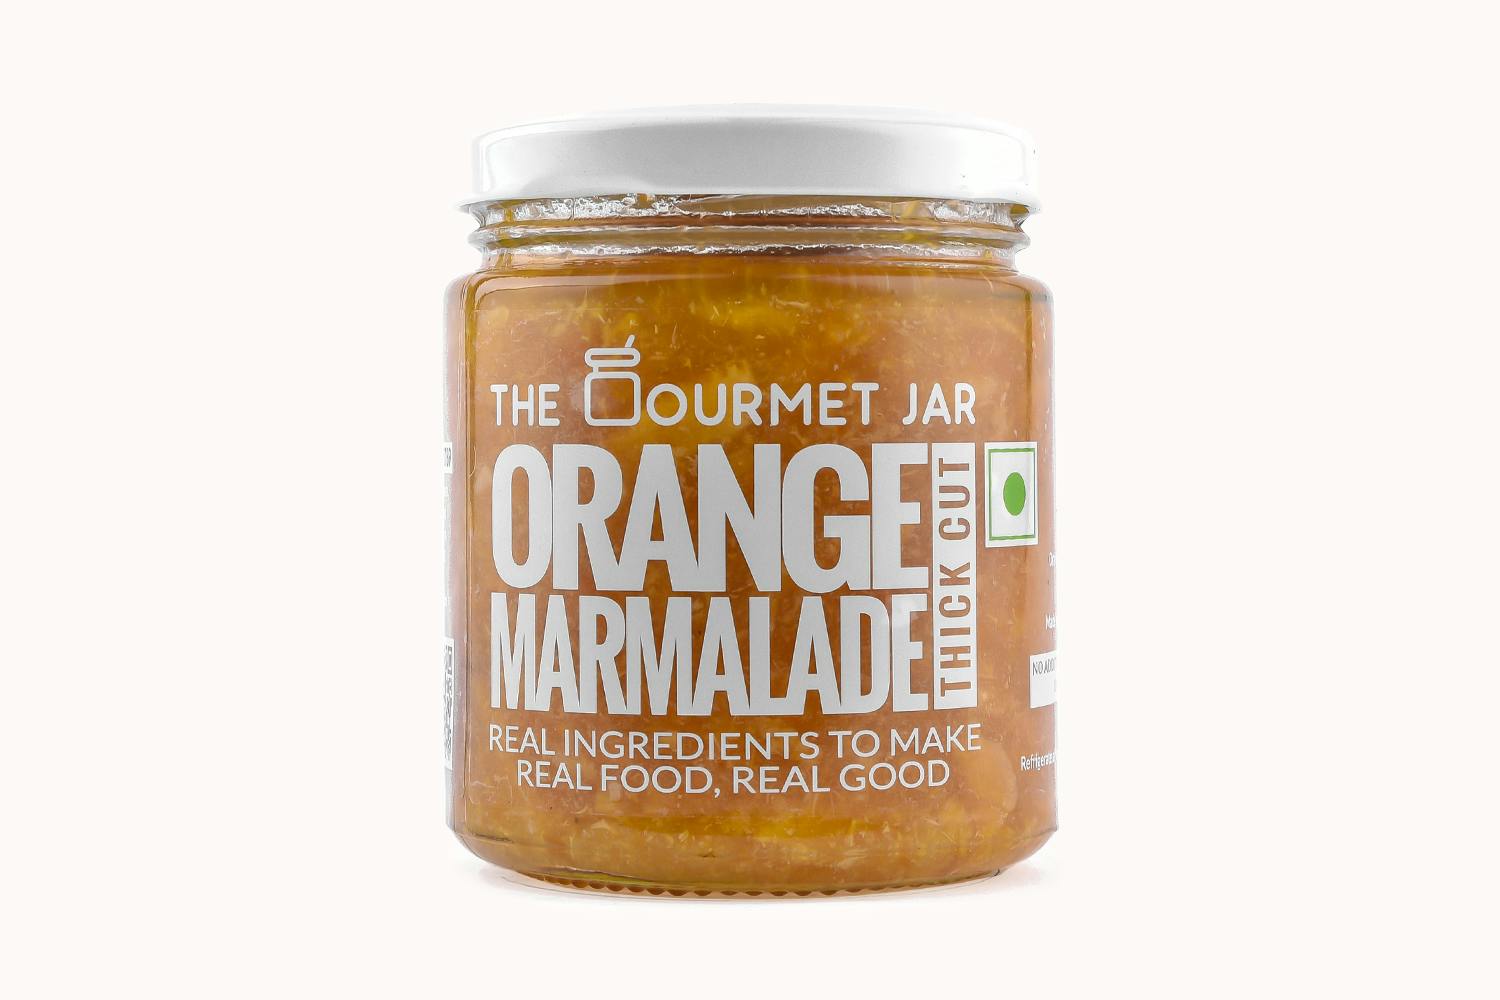 The Gourmet Jar Orange Marmalade